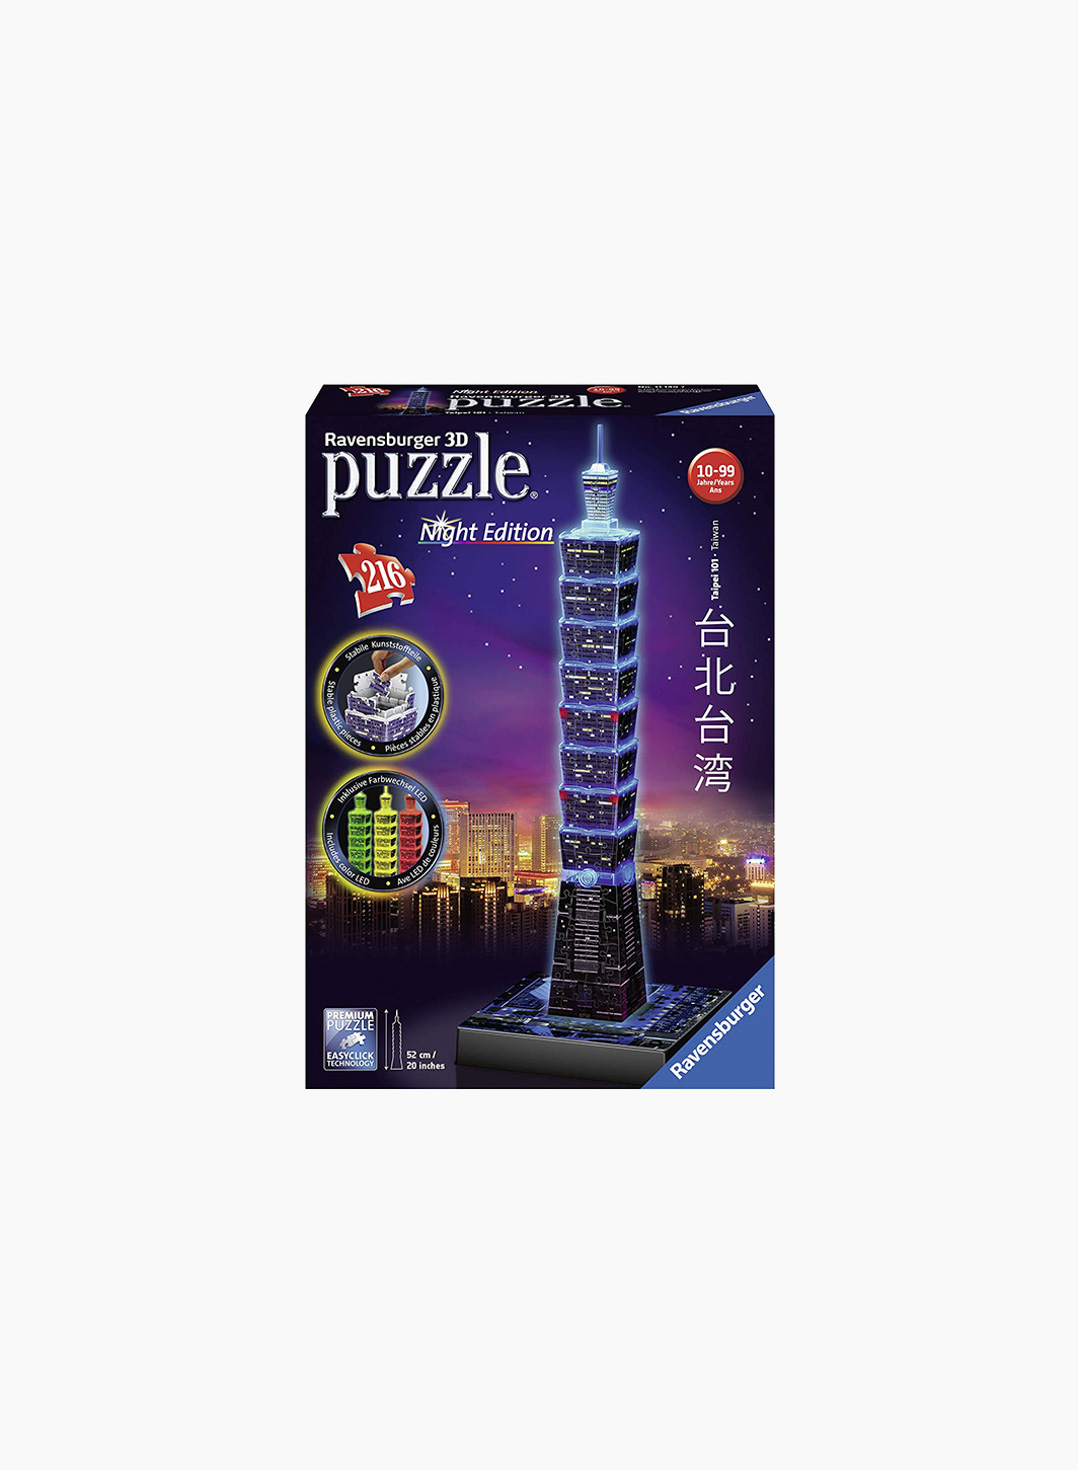 Ravensburger 3D Puzzle Taipei 101 216p